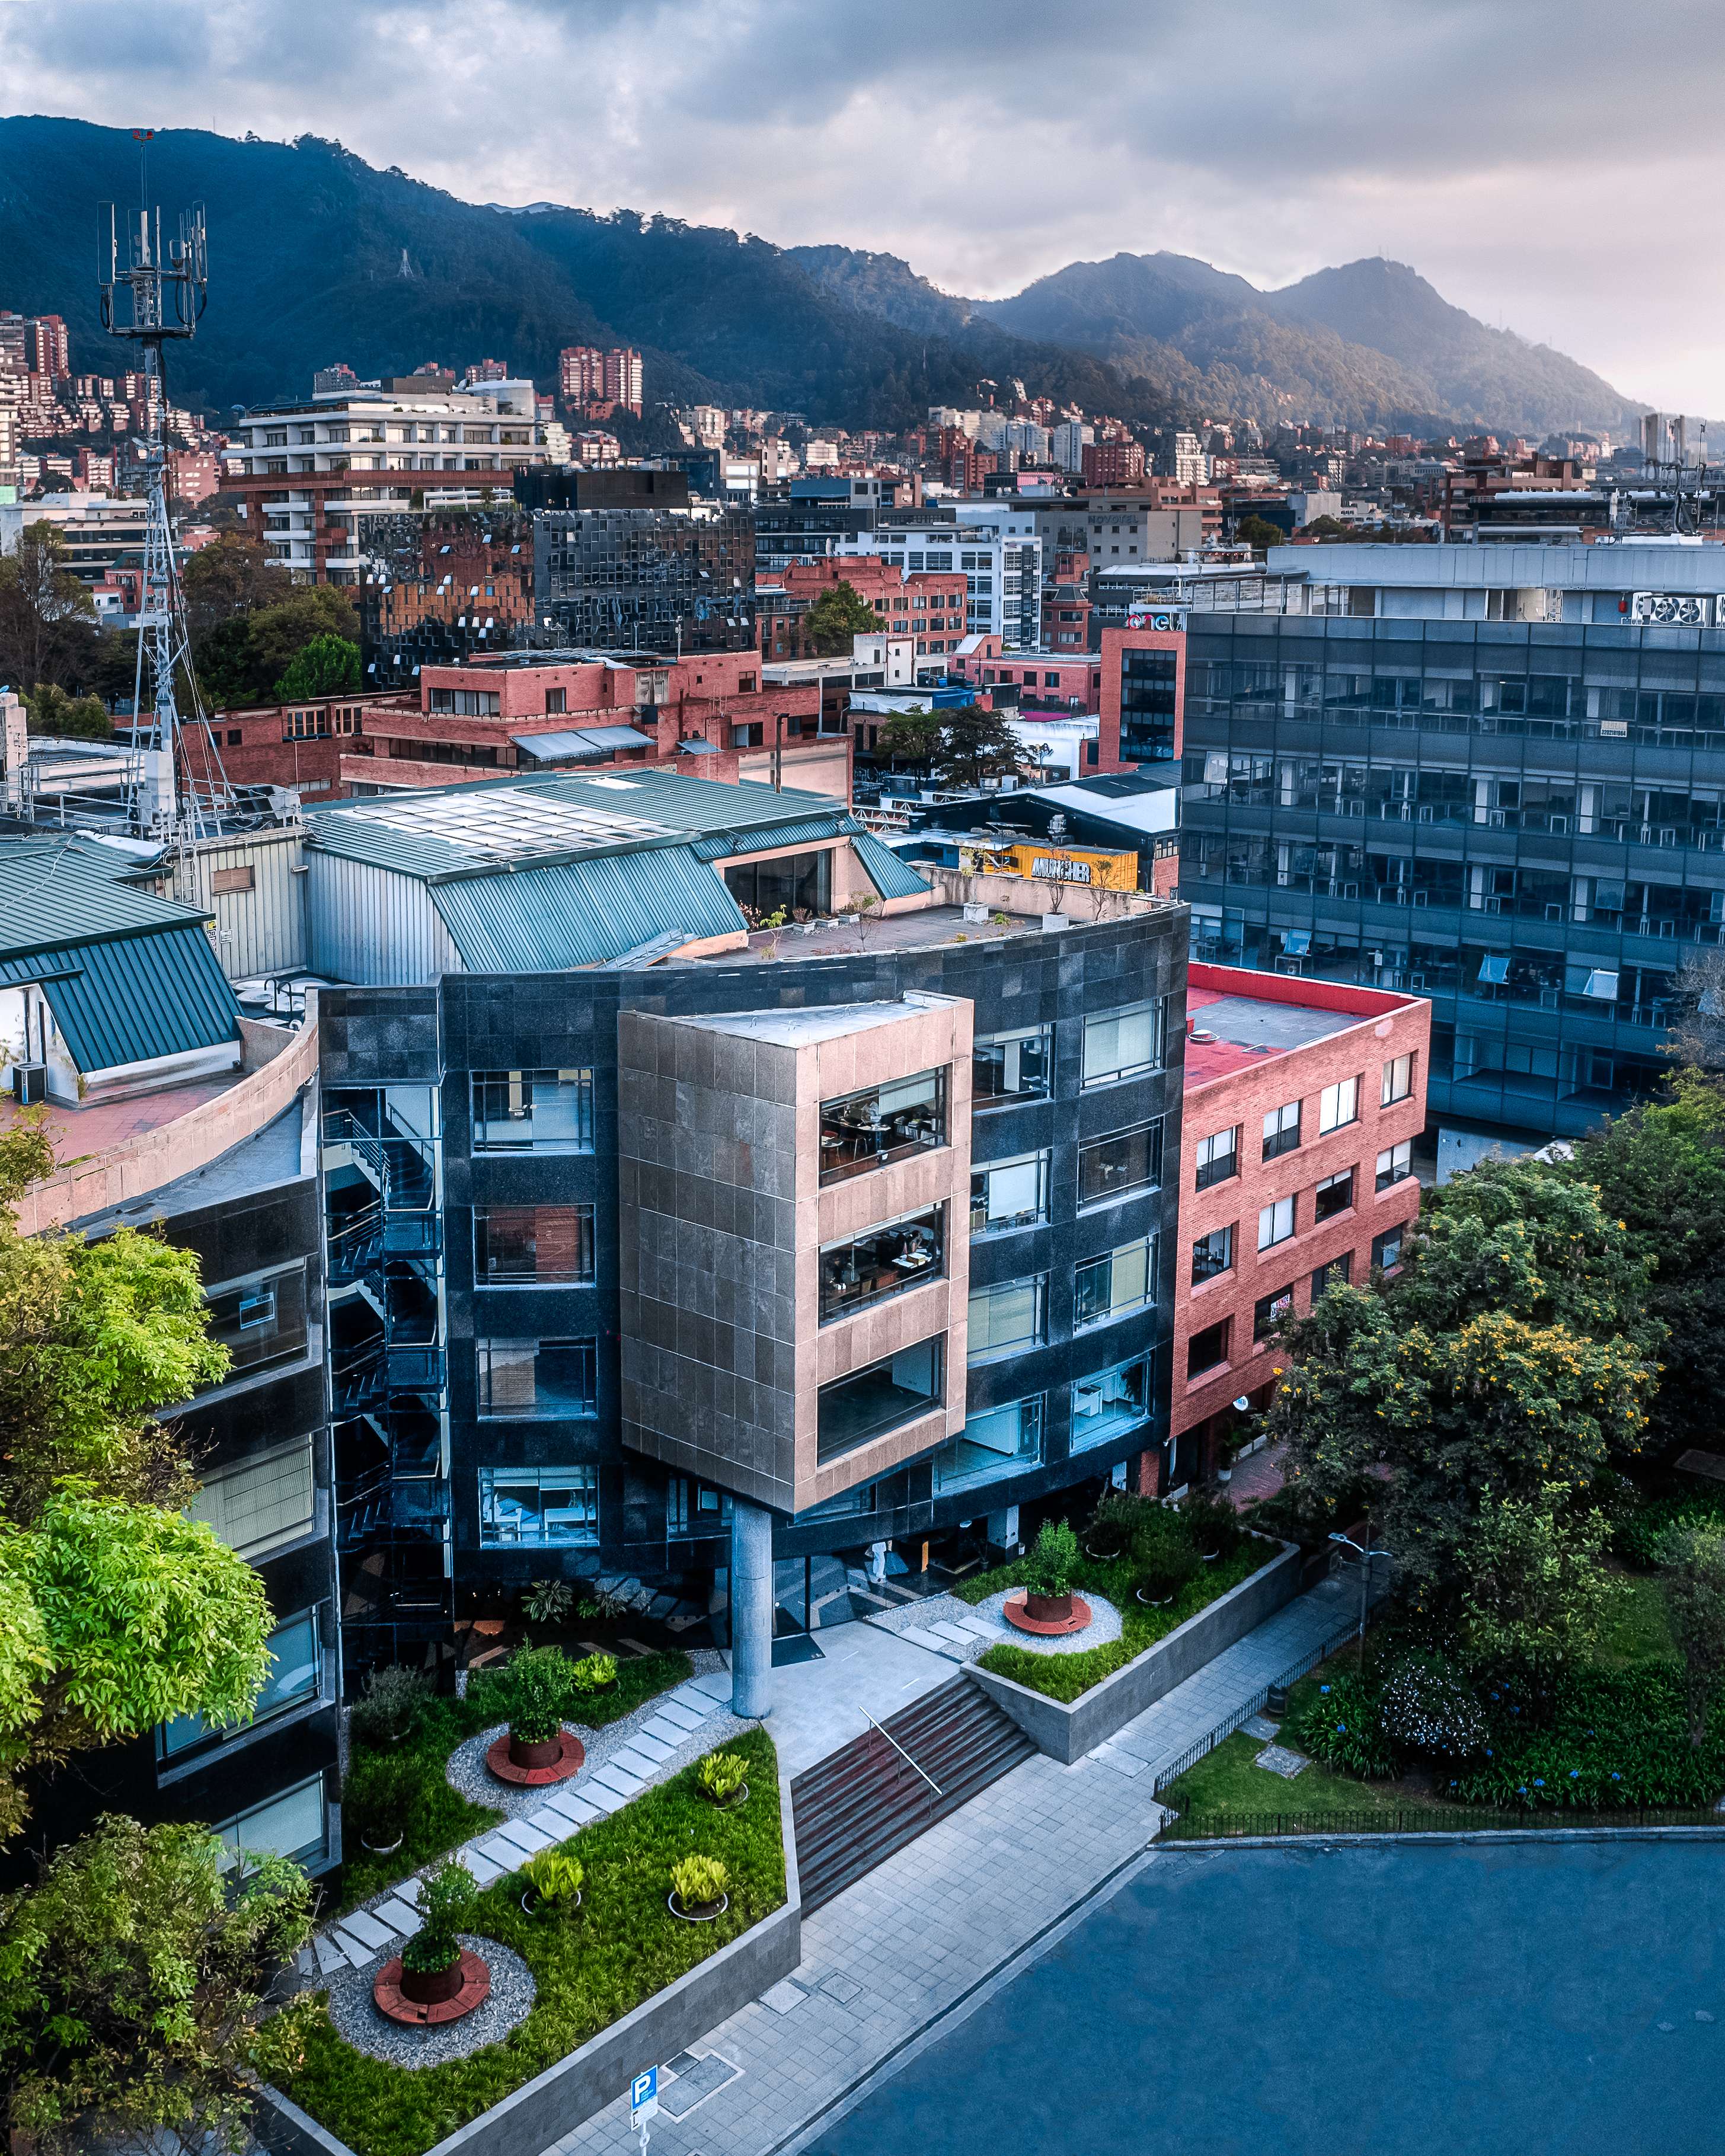 ROSEN location in Bogota, Colombia.